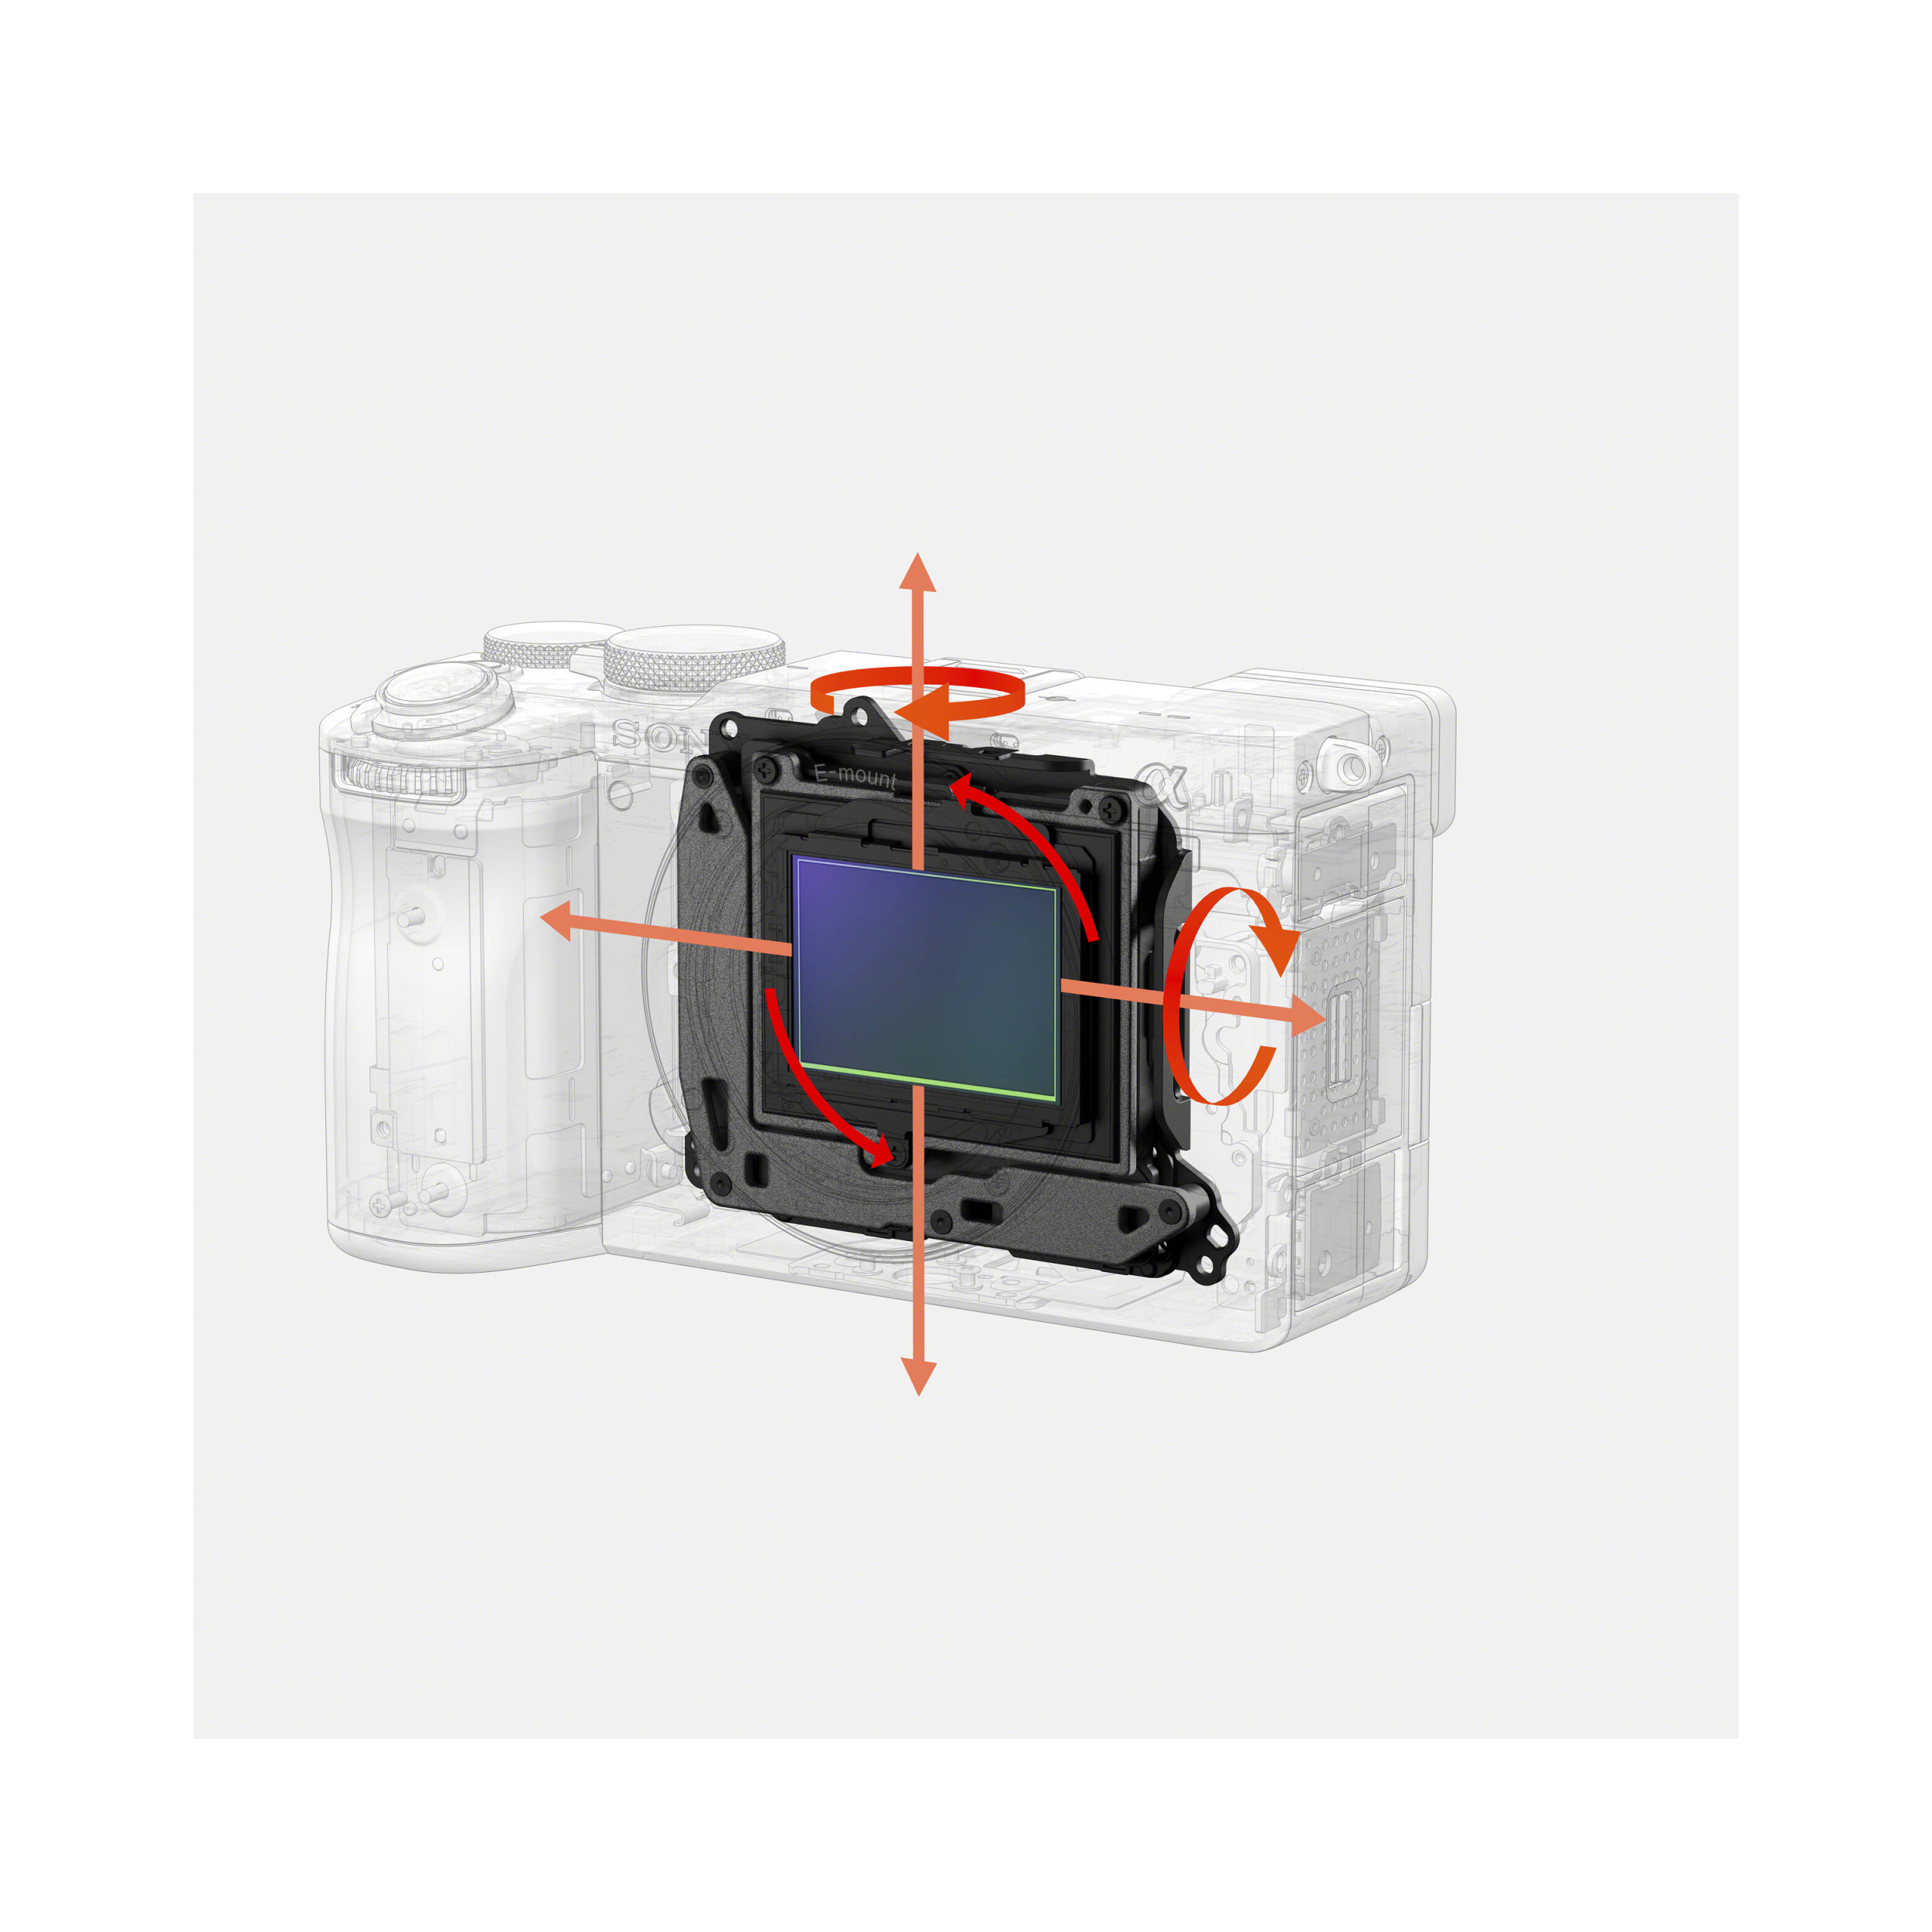 Caméra sans miroir Sony A7C II avec objectif 28-60 mm - noir